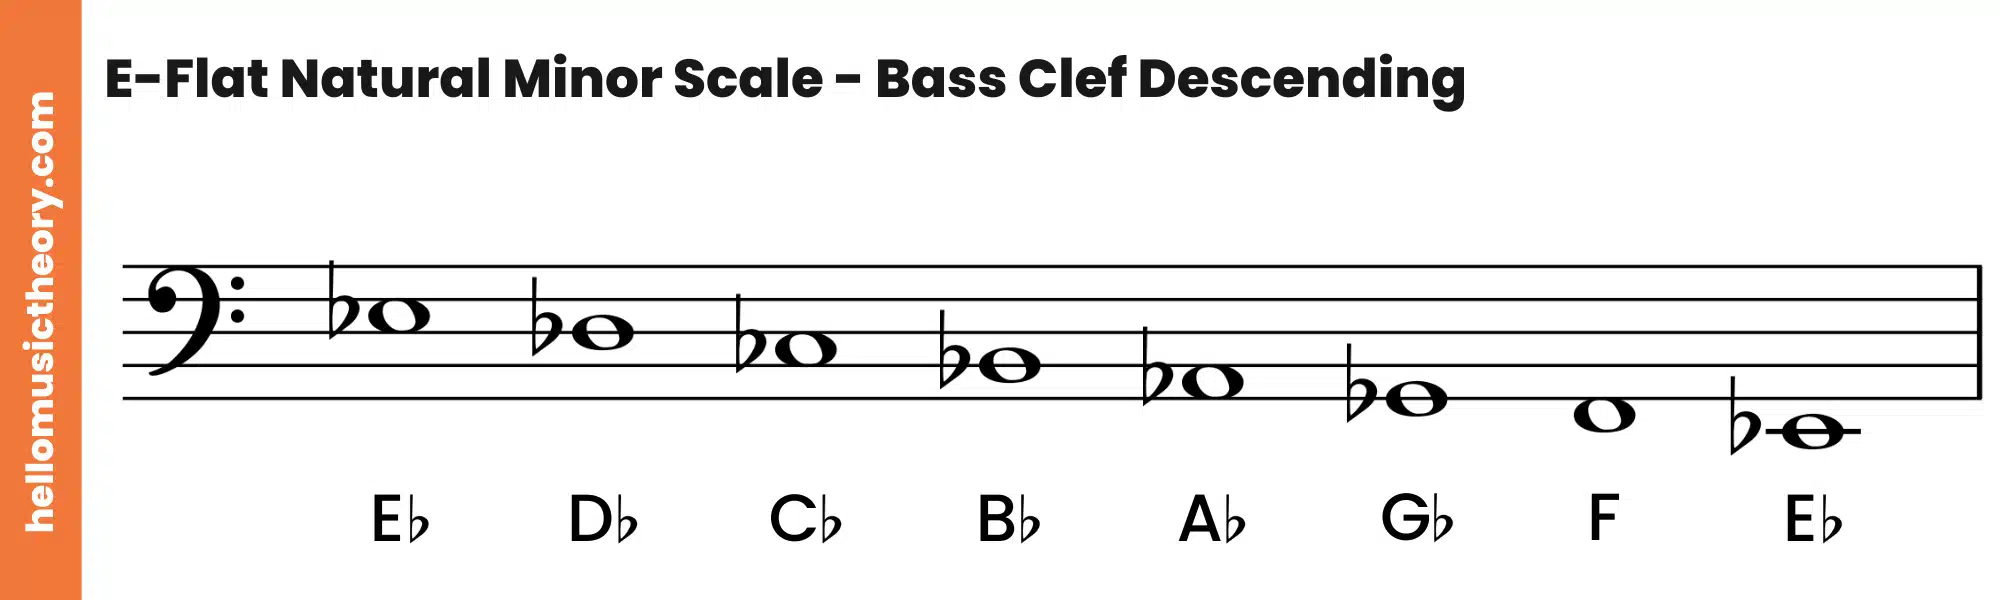 E-Flat Natural Minor Scale Bass Clef Descending